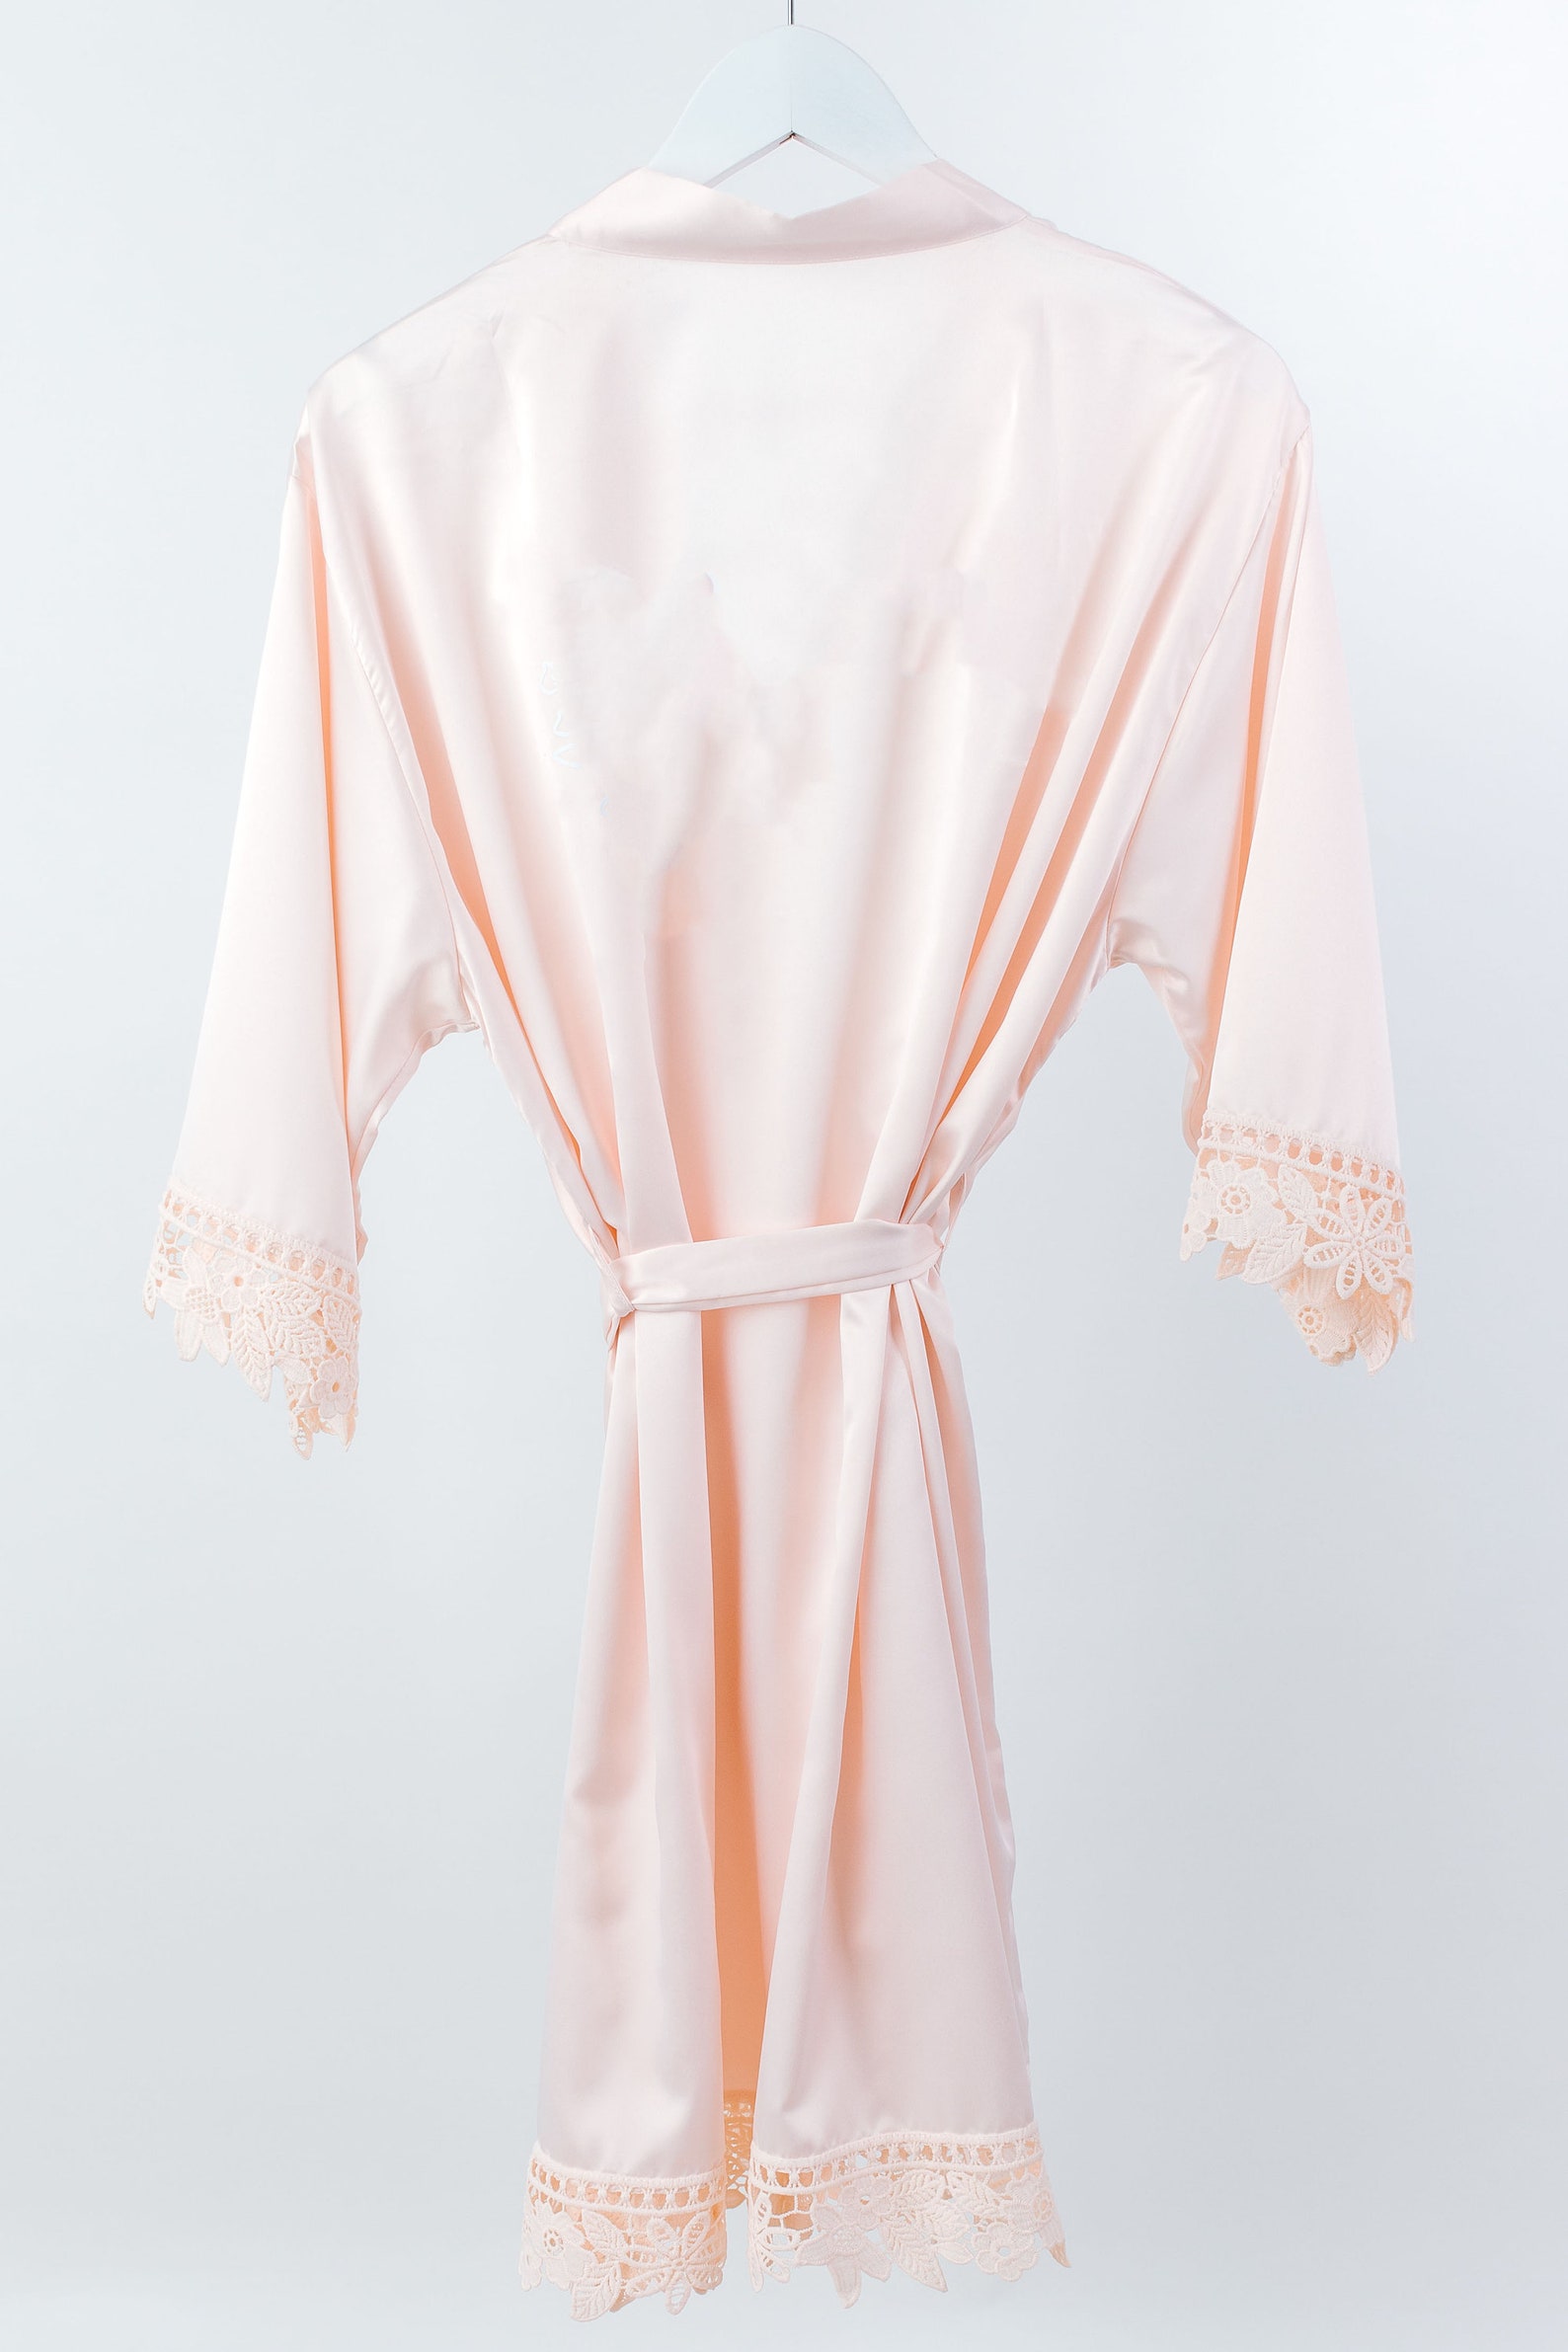 Blank bridesmaid robe plain bridal robe satin wedding robe | Etsy